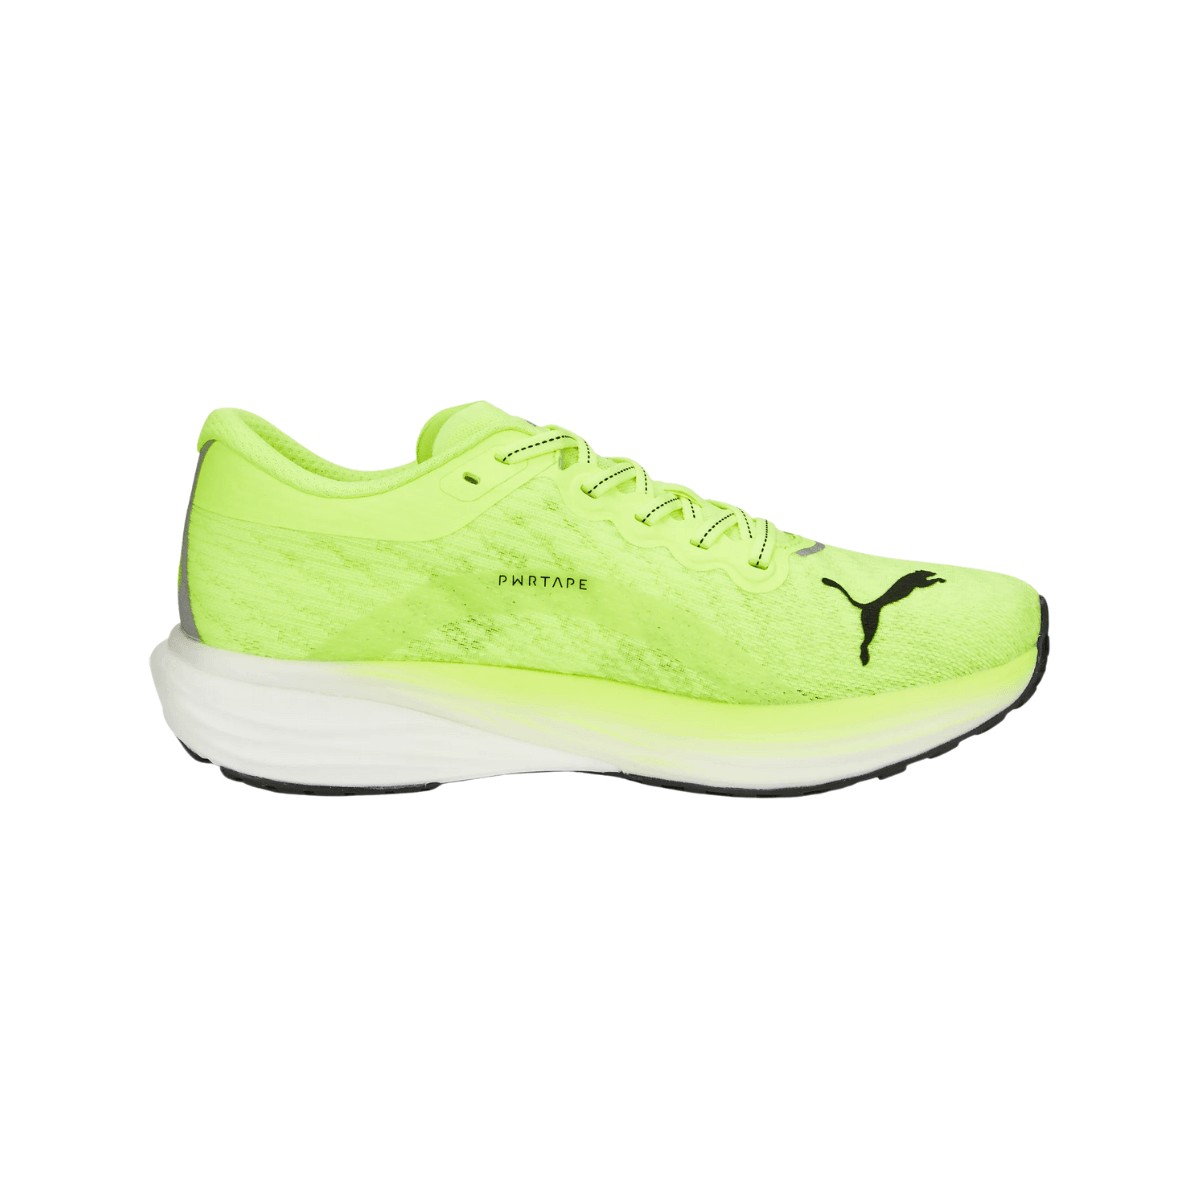 Shoes Puma Deviate Nitro 2 Lime AW22, Size 42,5 - EUR